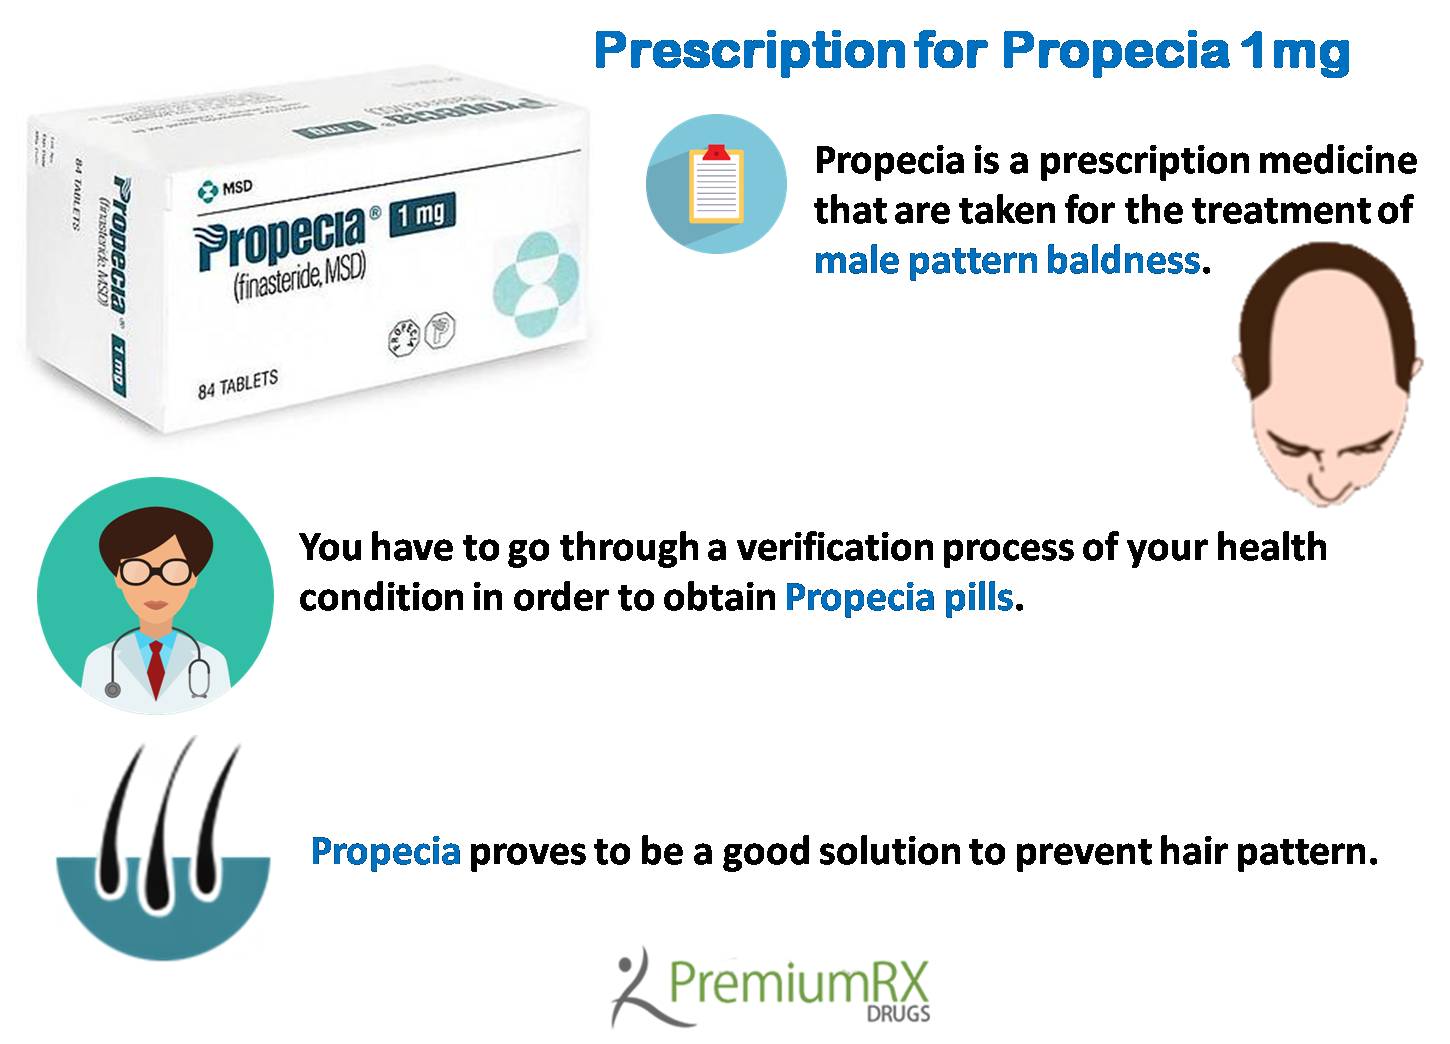 Do you need a prescription for Propecia 1mg